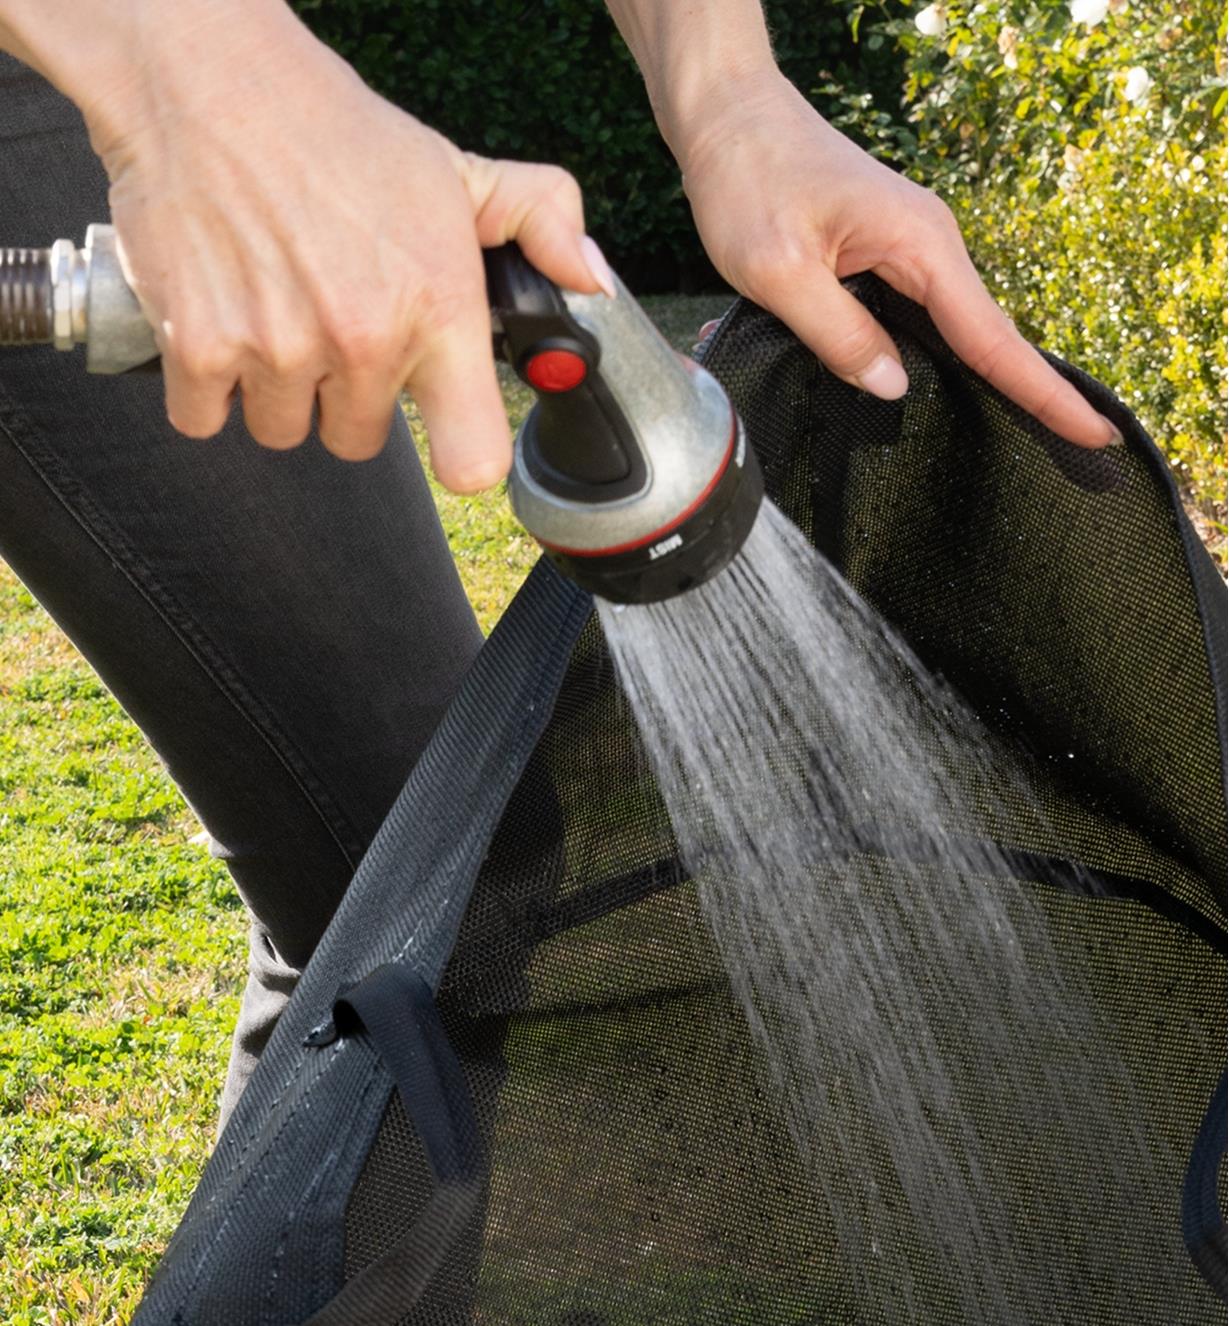 A gardener uses a hose to rinse the 7 gallon mesh fabric pot